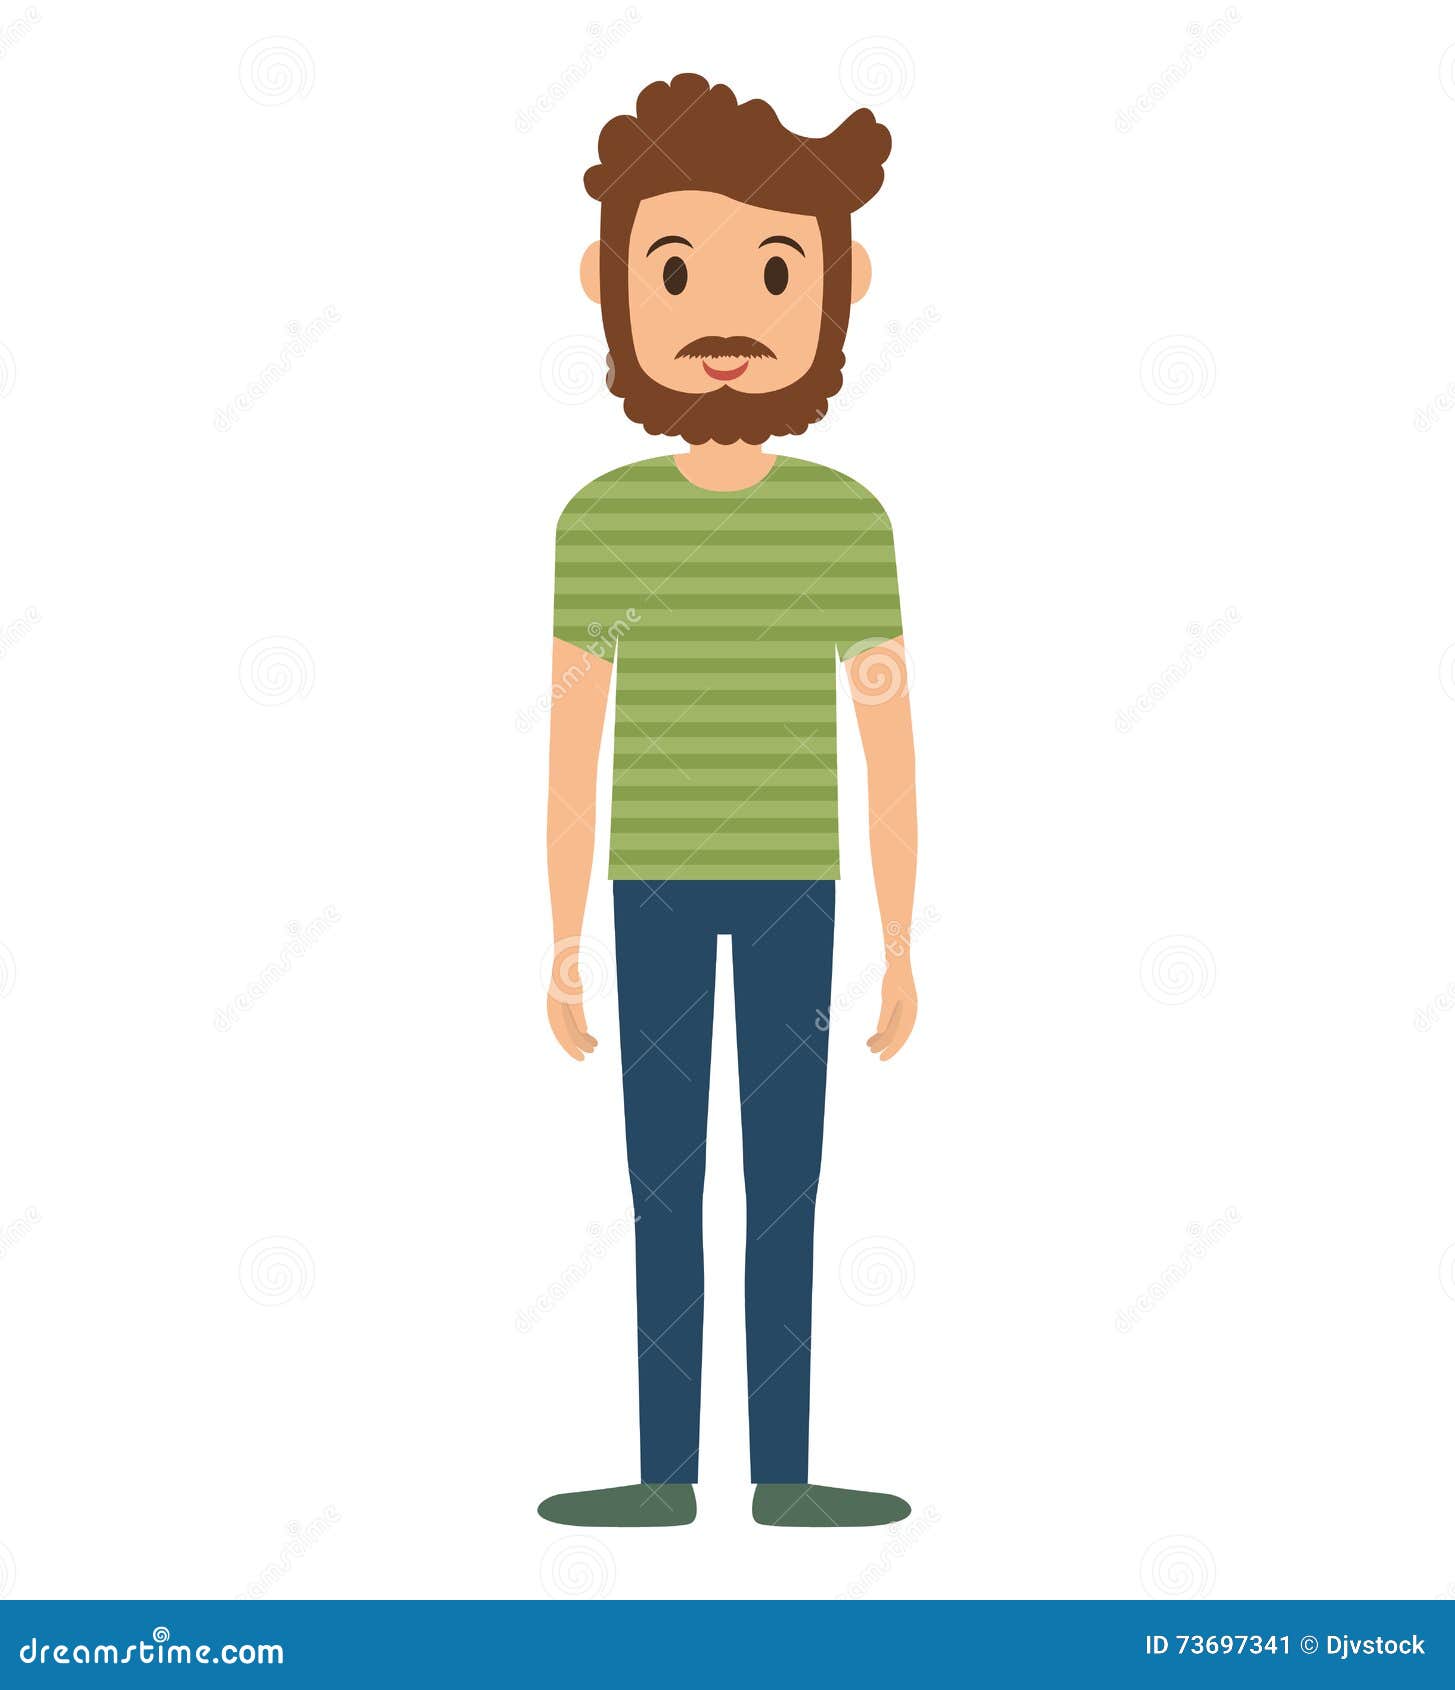 Cartoon Man Icon. Person Design. Vector Graphic Stock Vector - Illustration  of symbol, male: 73697341